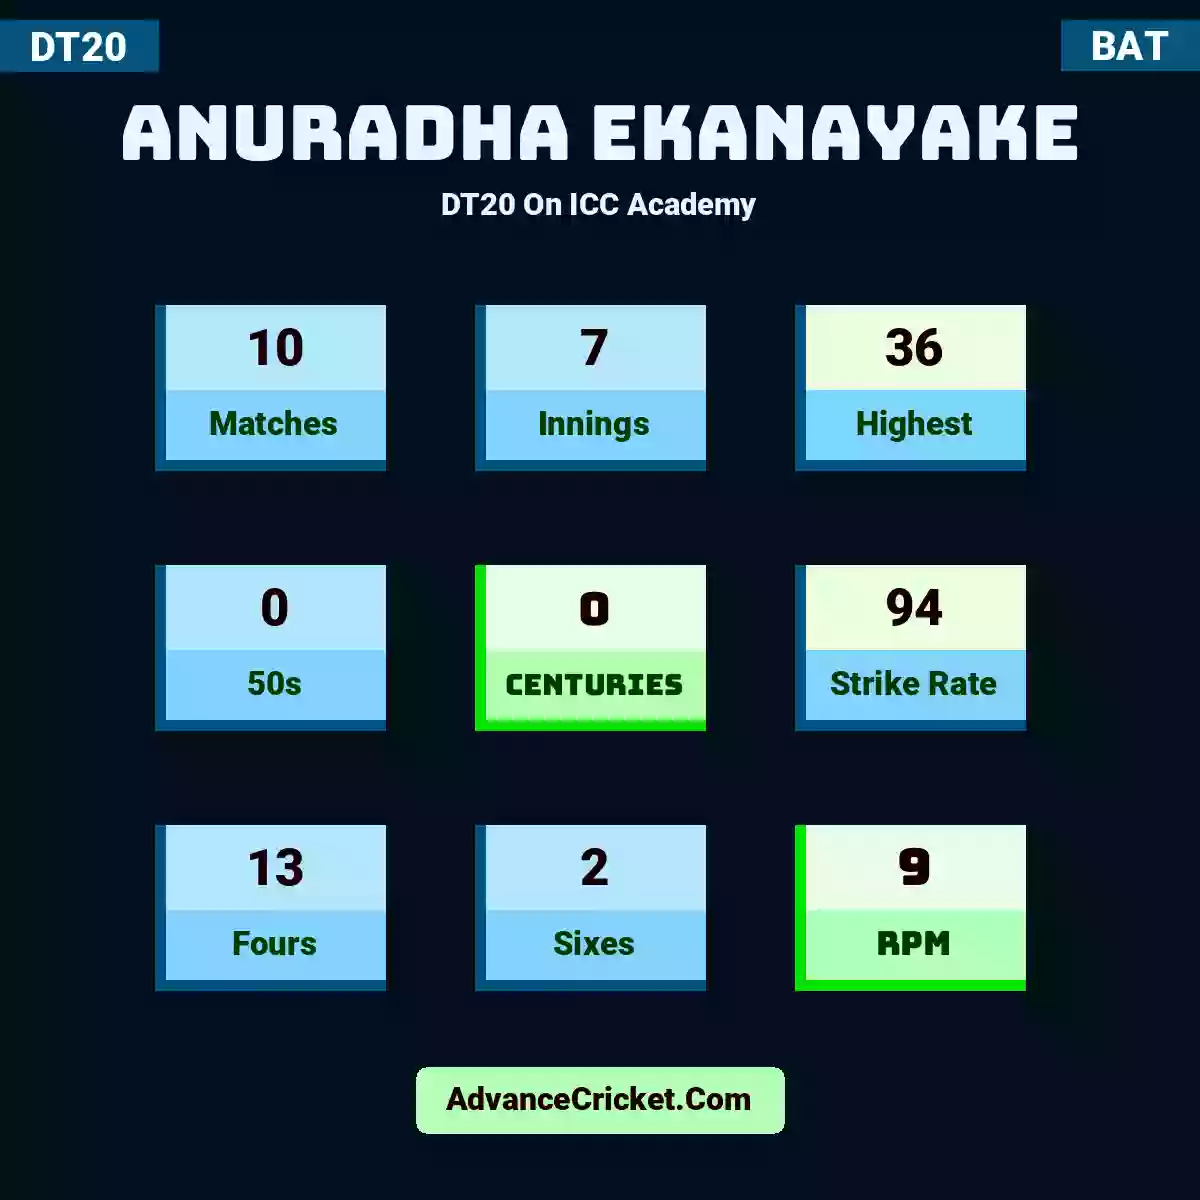 Anuradha Ekanayake DT20  On ICC Academy, Anuradha Ekanayake played 10 matches, scored 36 runs as highest, 0 half-centuries, and 0 centuries, with a strike rate of 94. A.Ekanayake hit 13 fours and 2 sixes, with an RPM of 9.